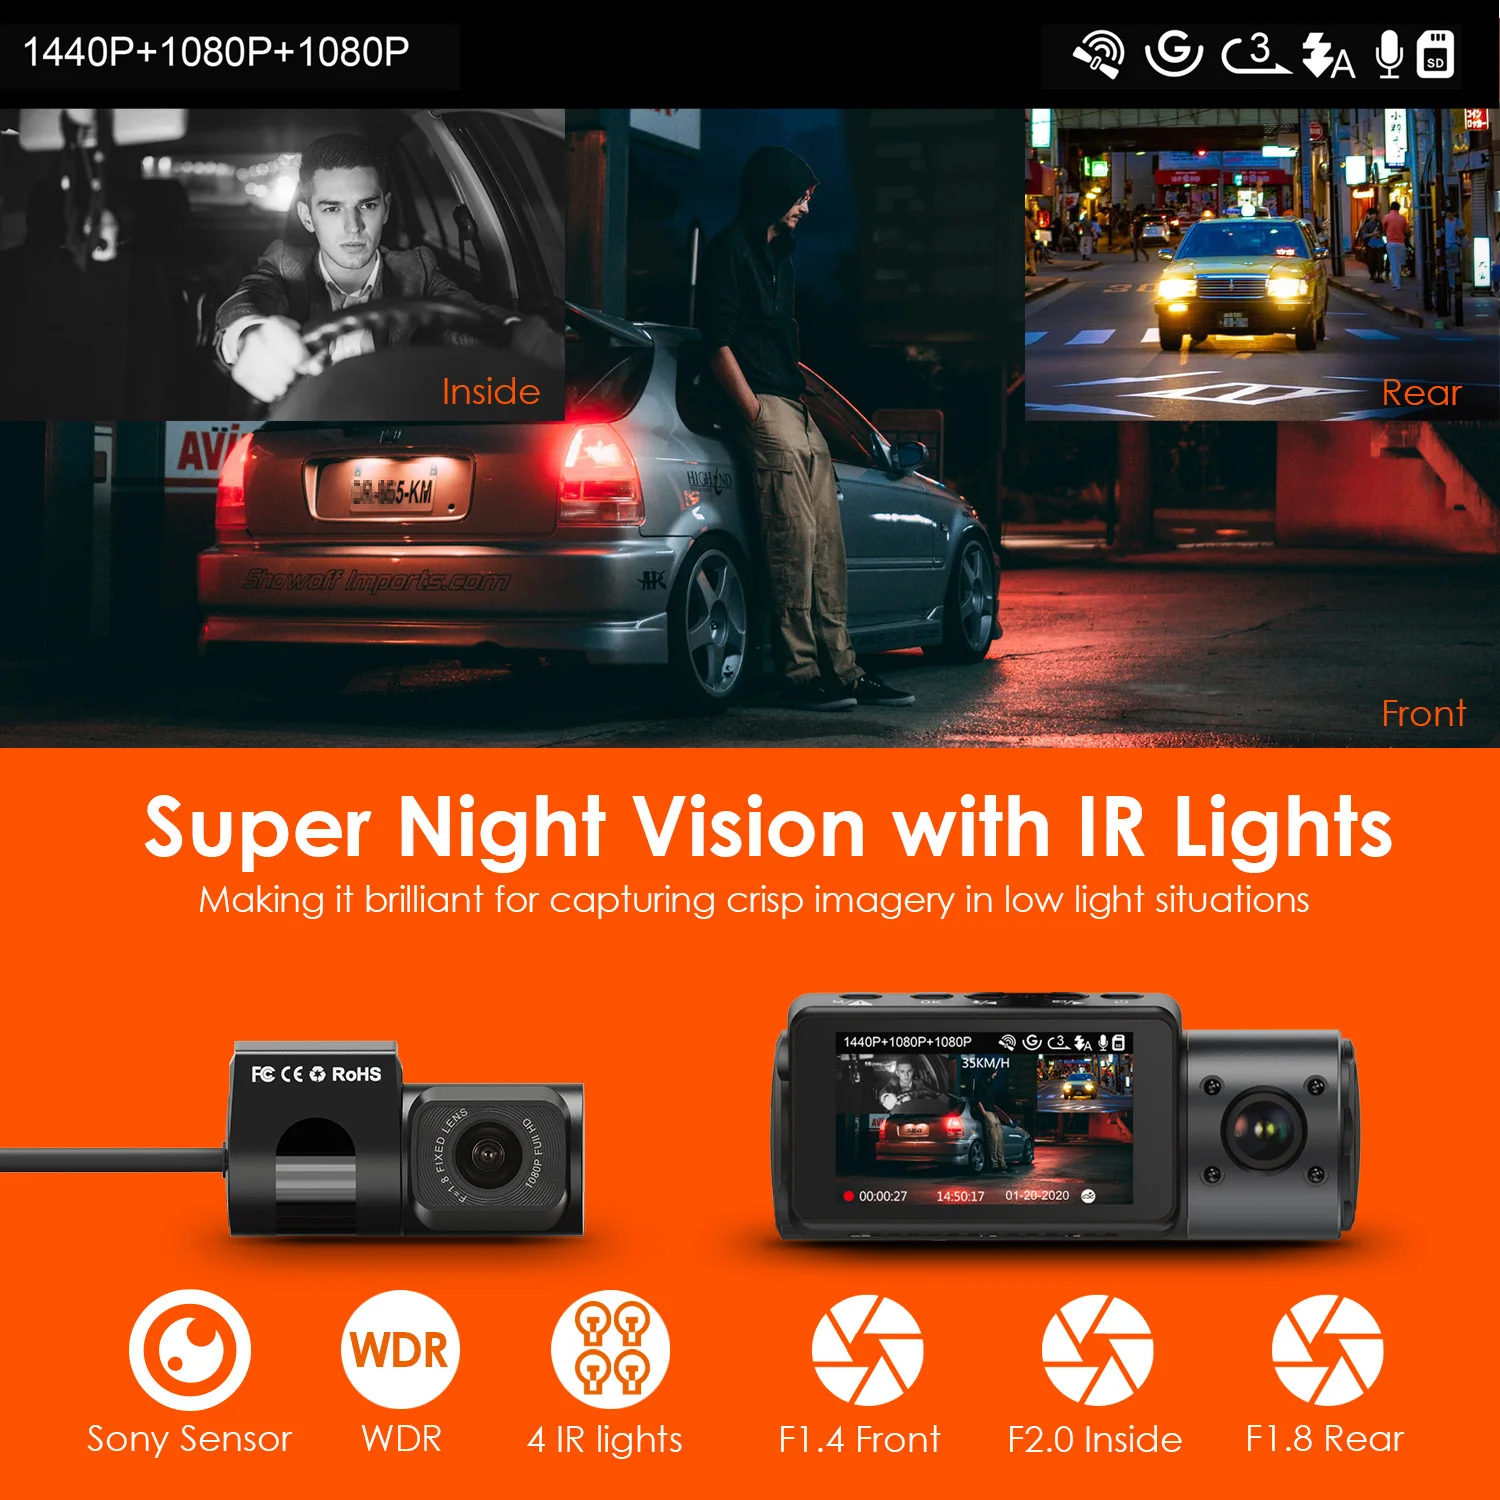 Vantrue N4 Dash Cam 4K Car Video Recorder 3 in 1 Car DVR Dashcam